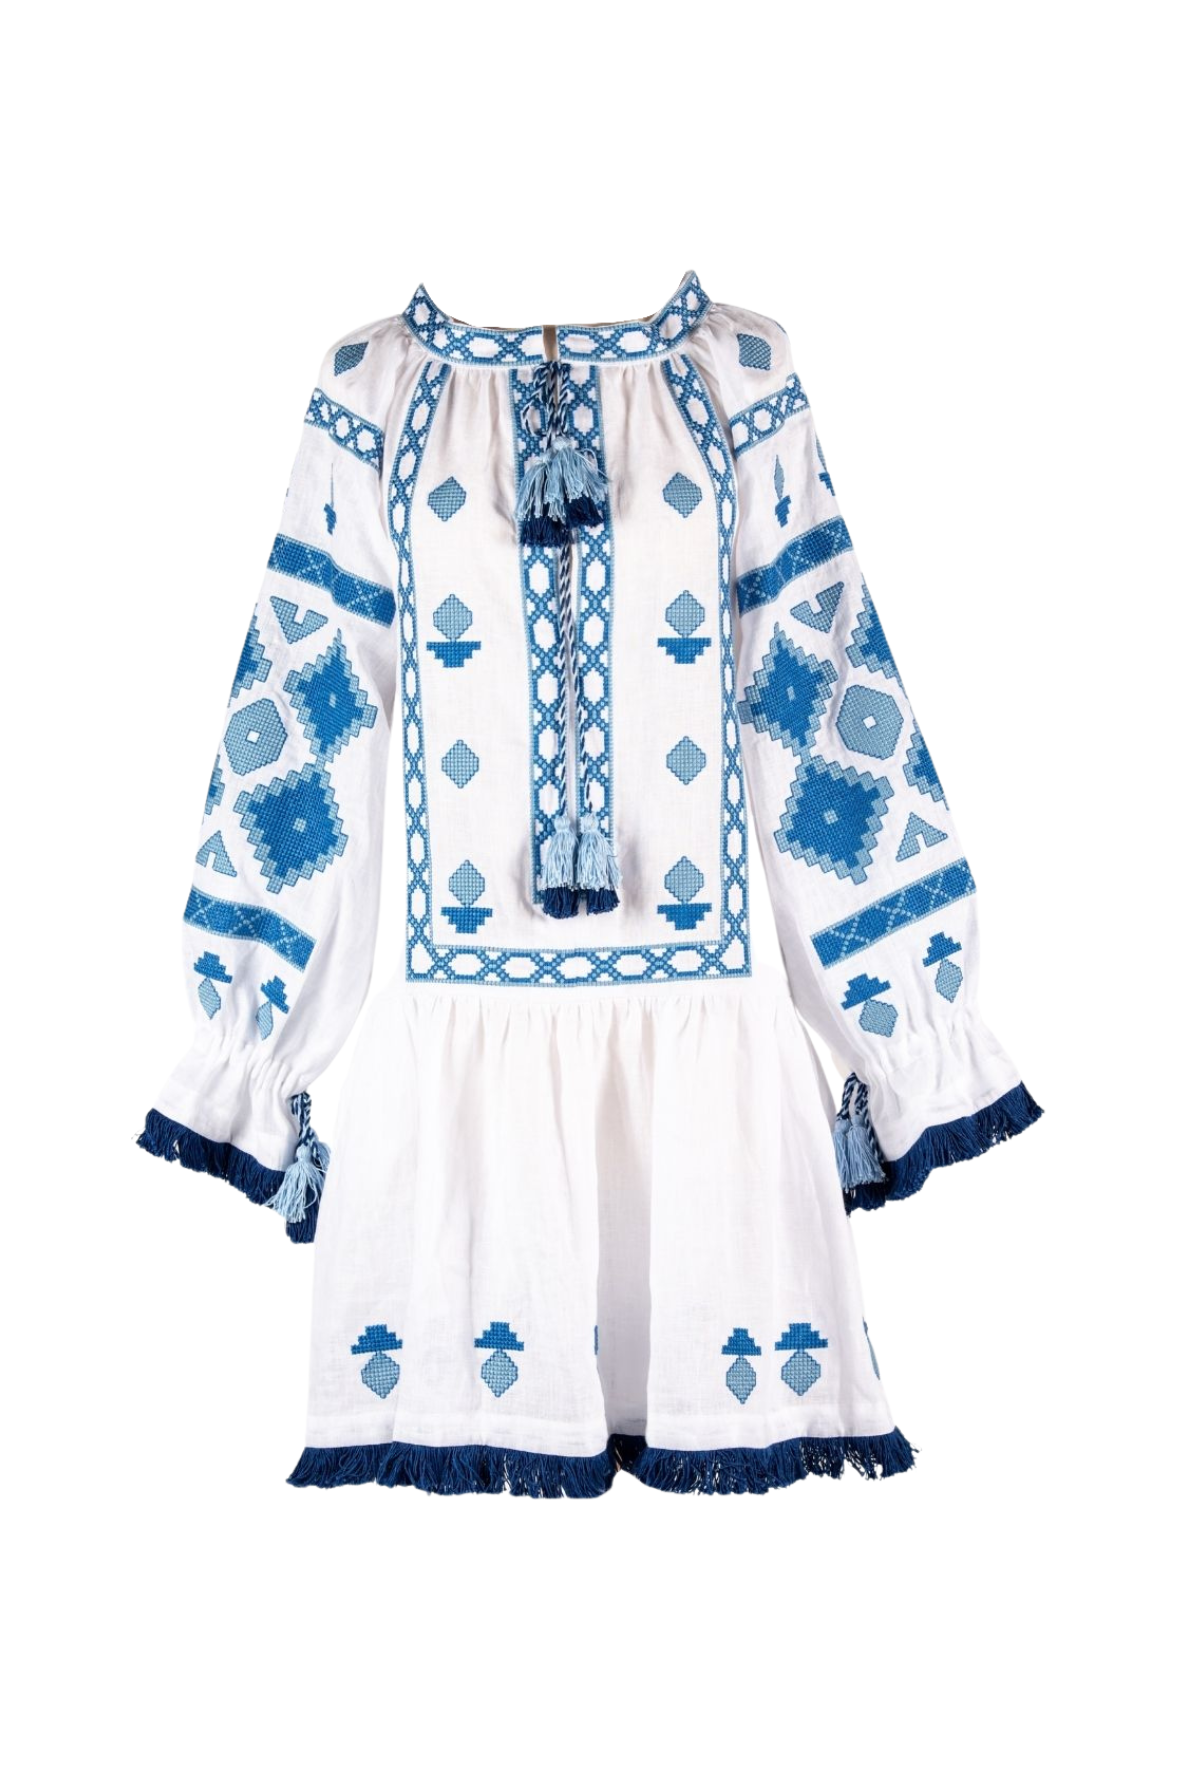 Nomeda Embroidered Ukrainian Dress - White, Blue by Larkin Lane